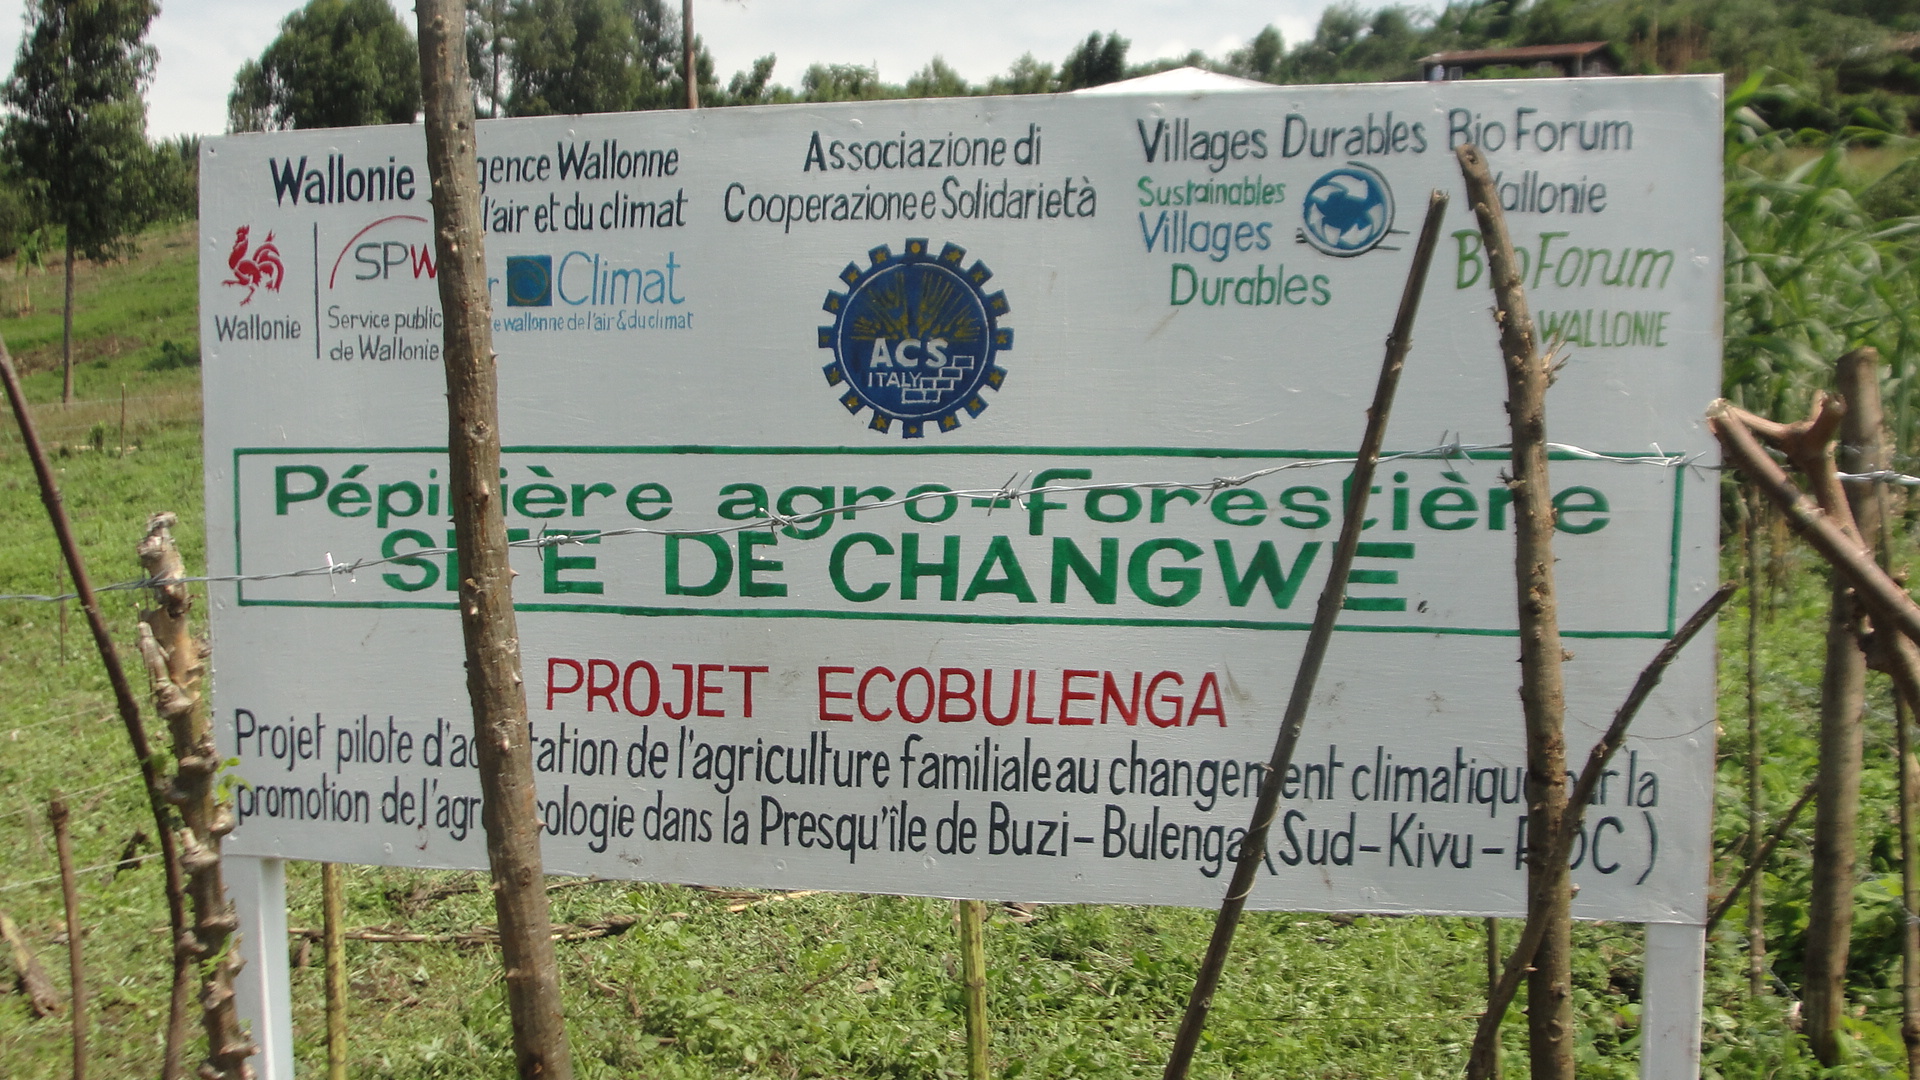 Kivu le programme Ecobulenga , adaptation au changement climatique